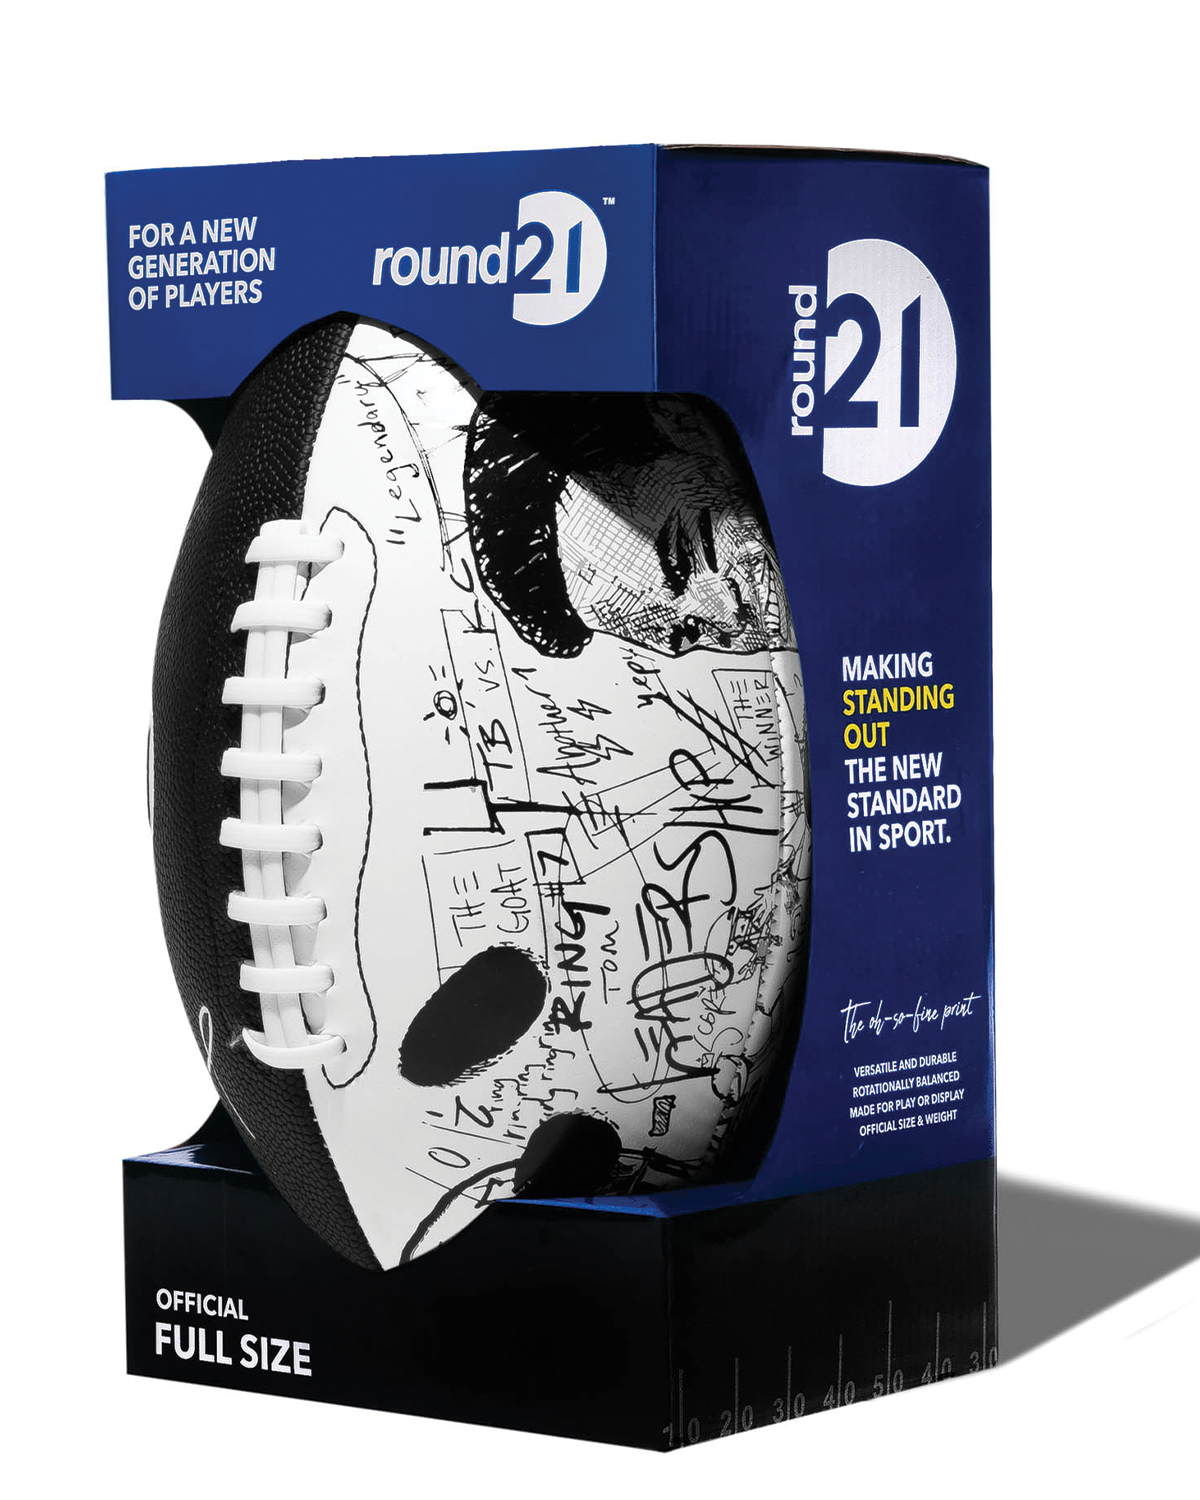 Official round21 x NFLPA Football - Tom Brady